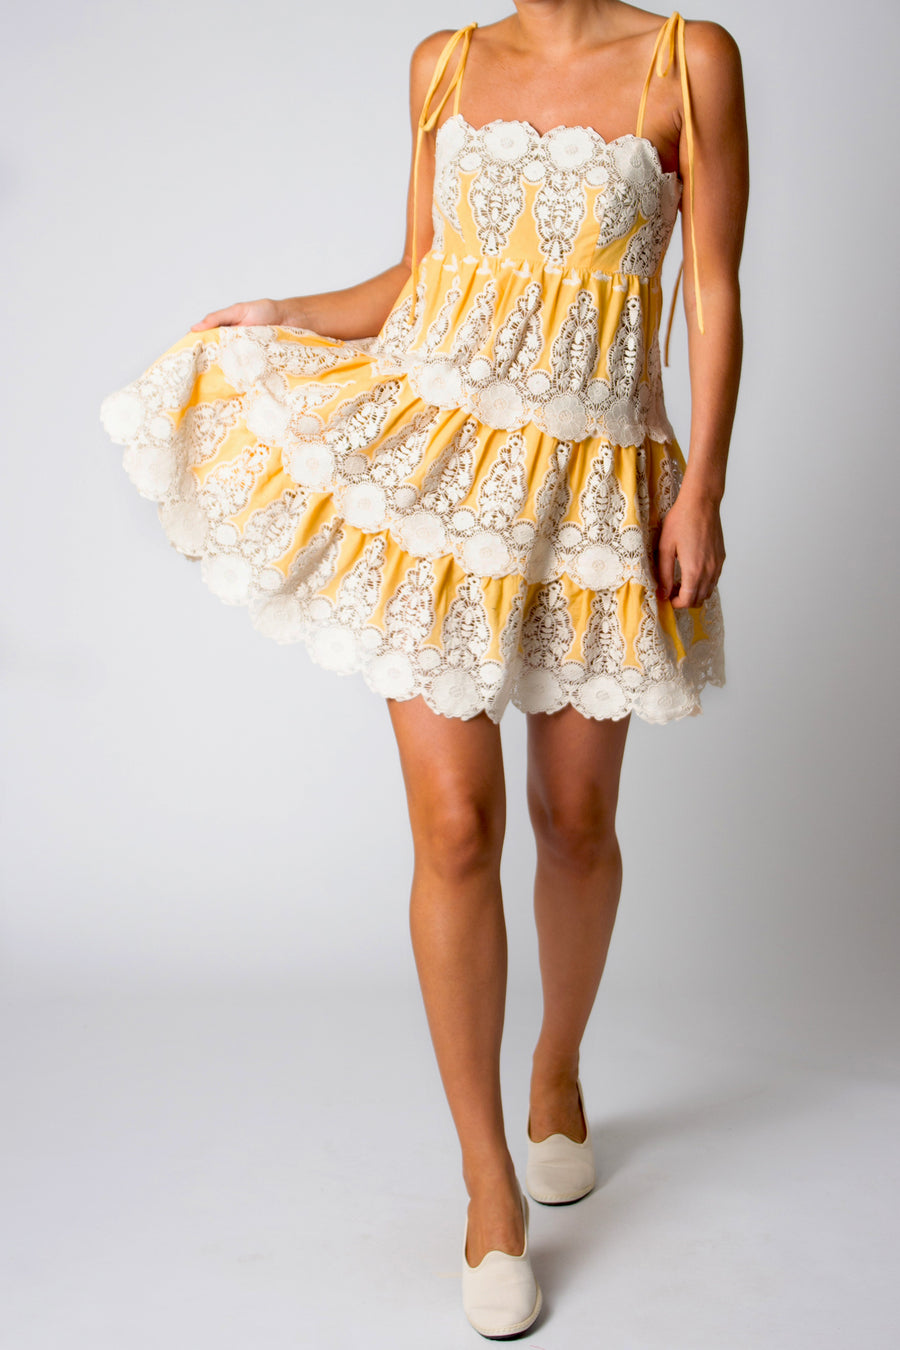 Gwendolyn Hummingbird Embroidered Dress